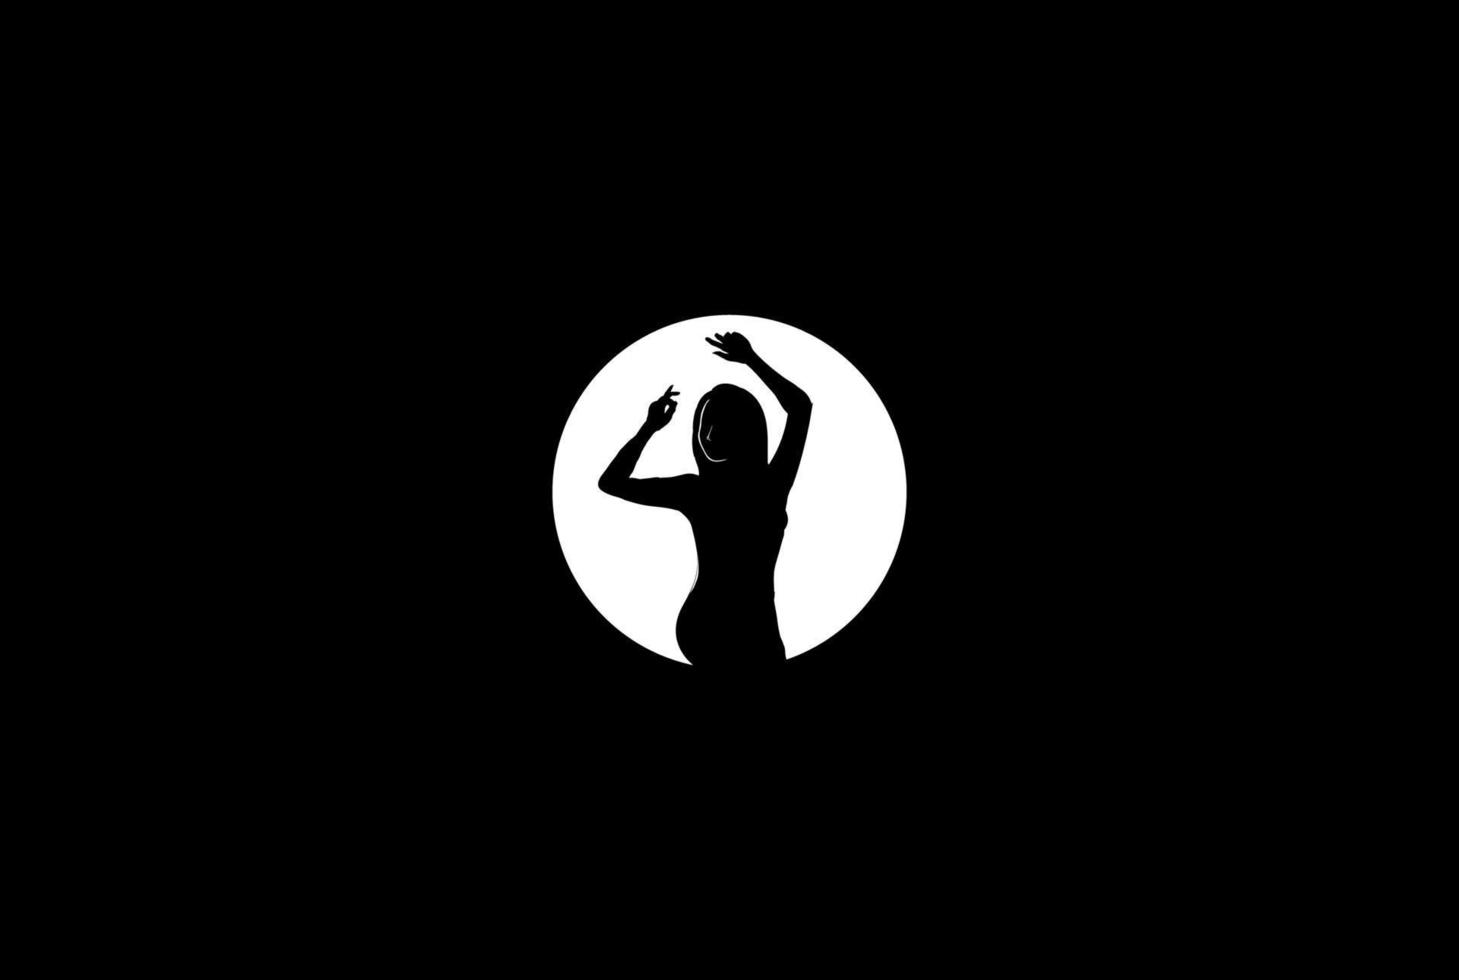 Hot Sexy Woman Lady Female Girl Silhouette for Bar Nightclub Strip Dancer Logo Design Vector